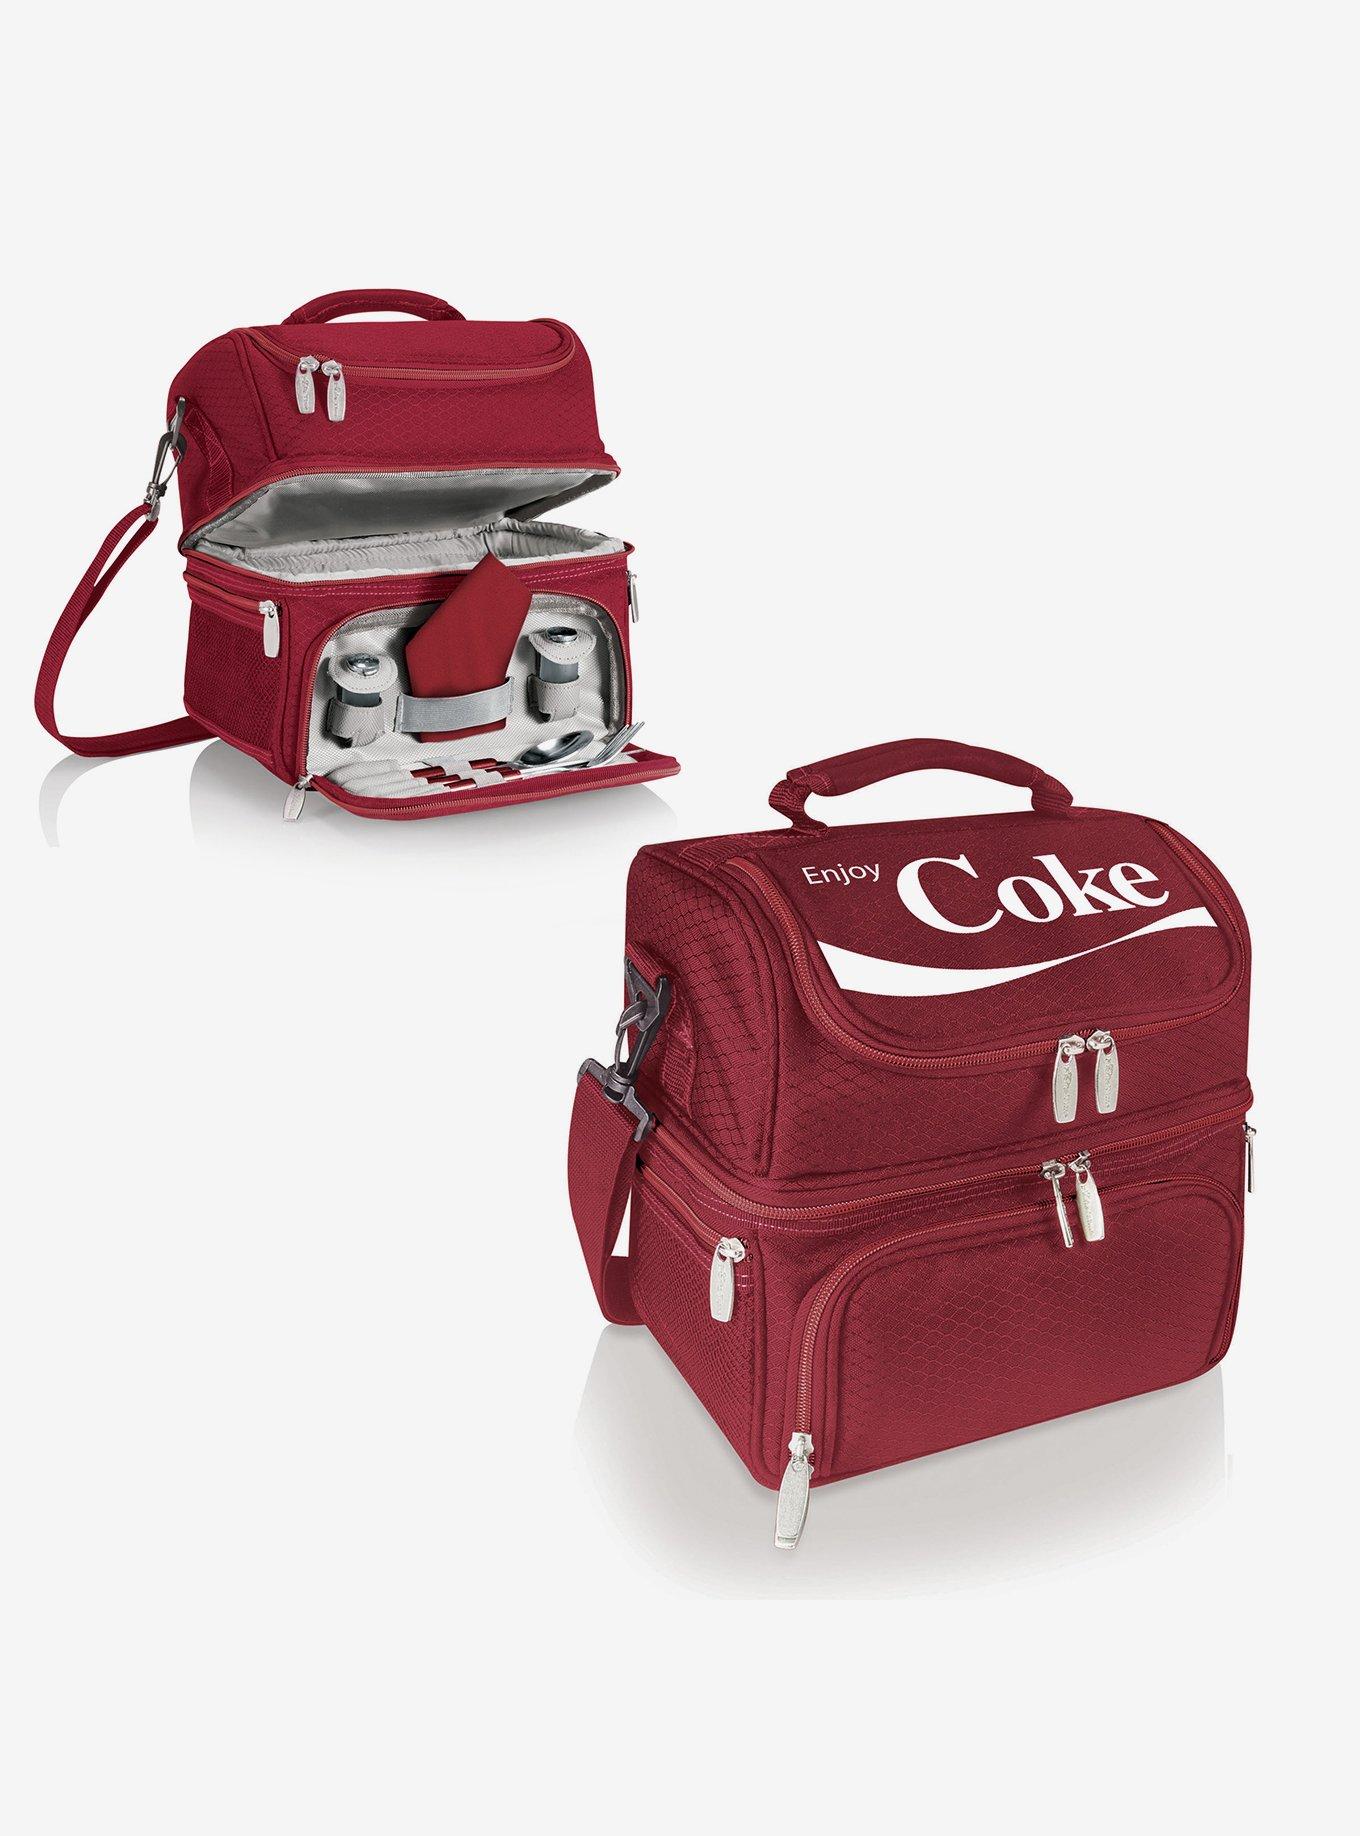 Coke Coca-Cola Enjoy Coke Pranzo Lunch Cooler, , alternate